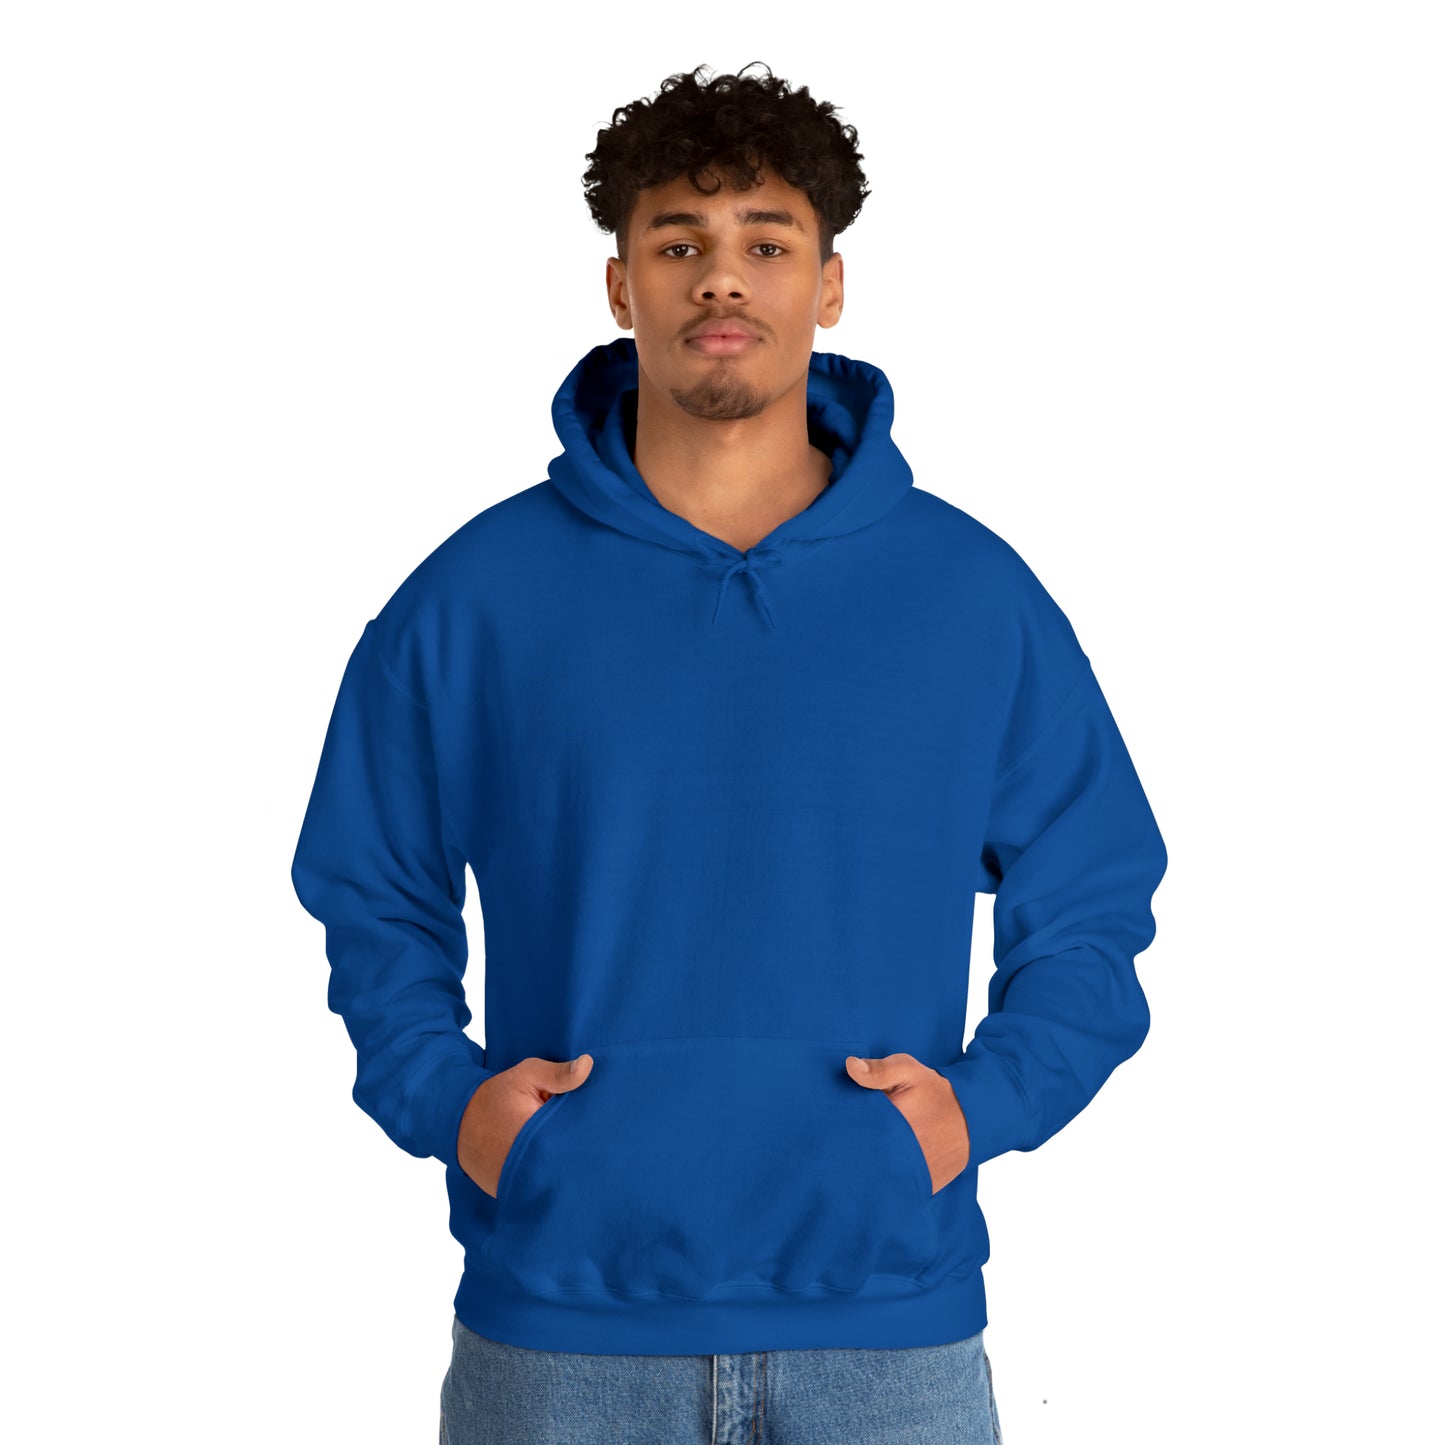 Cannabis -  Unisex Hooded Sweatshirt